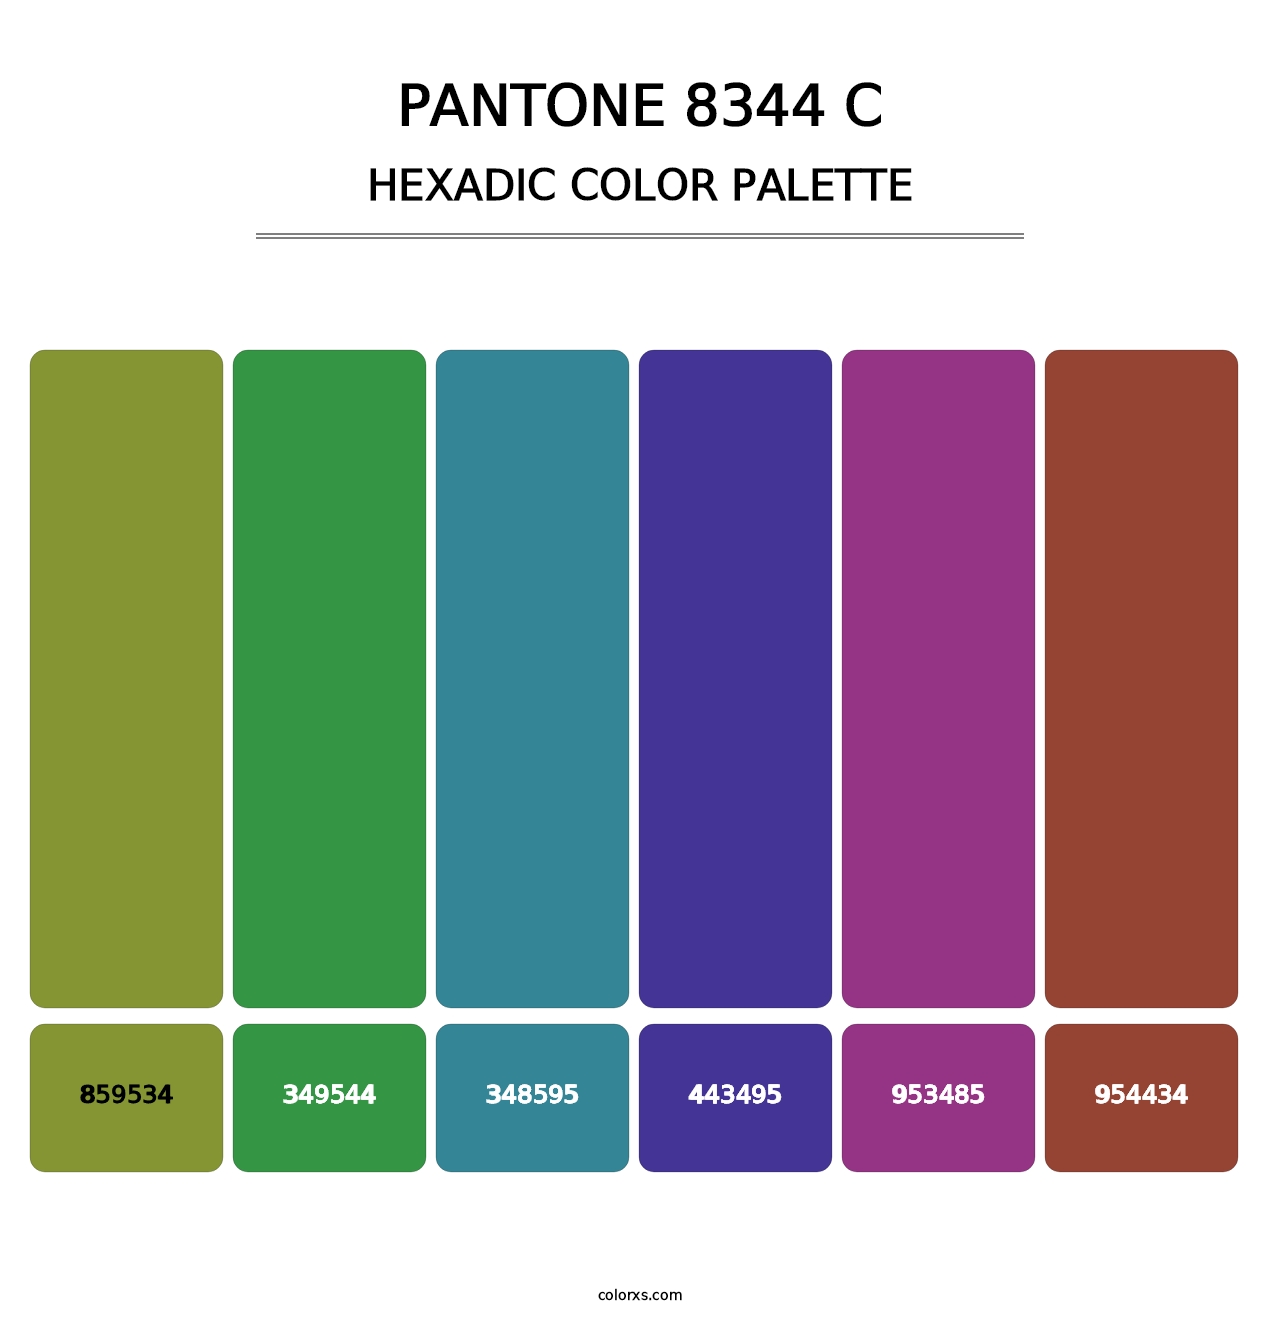 PANTONE 8344 C - Hexadic Color Palette